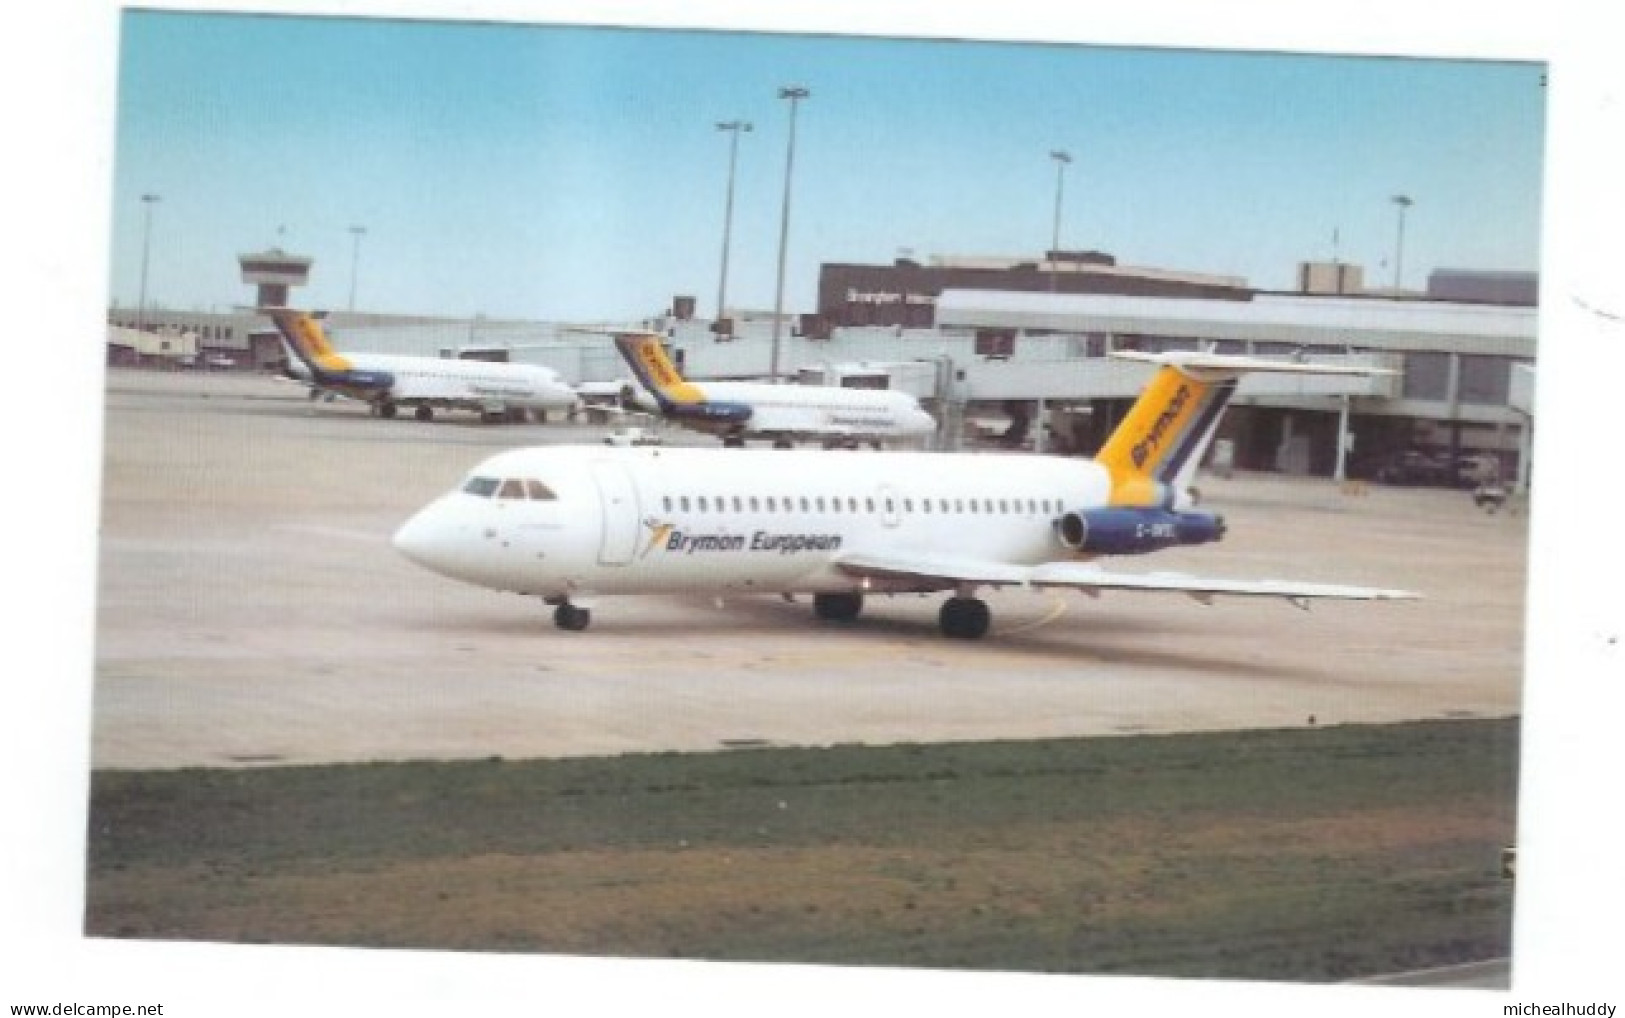 POSTCARD   PUBL BY  BY C MCQUAIDE IN HIS AIRPORT SERRIES  BIRMINGHAM INTERNATIONAL   CARD N0 15 - Aerodrome